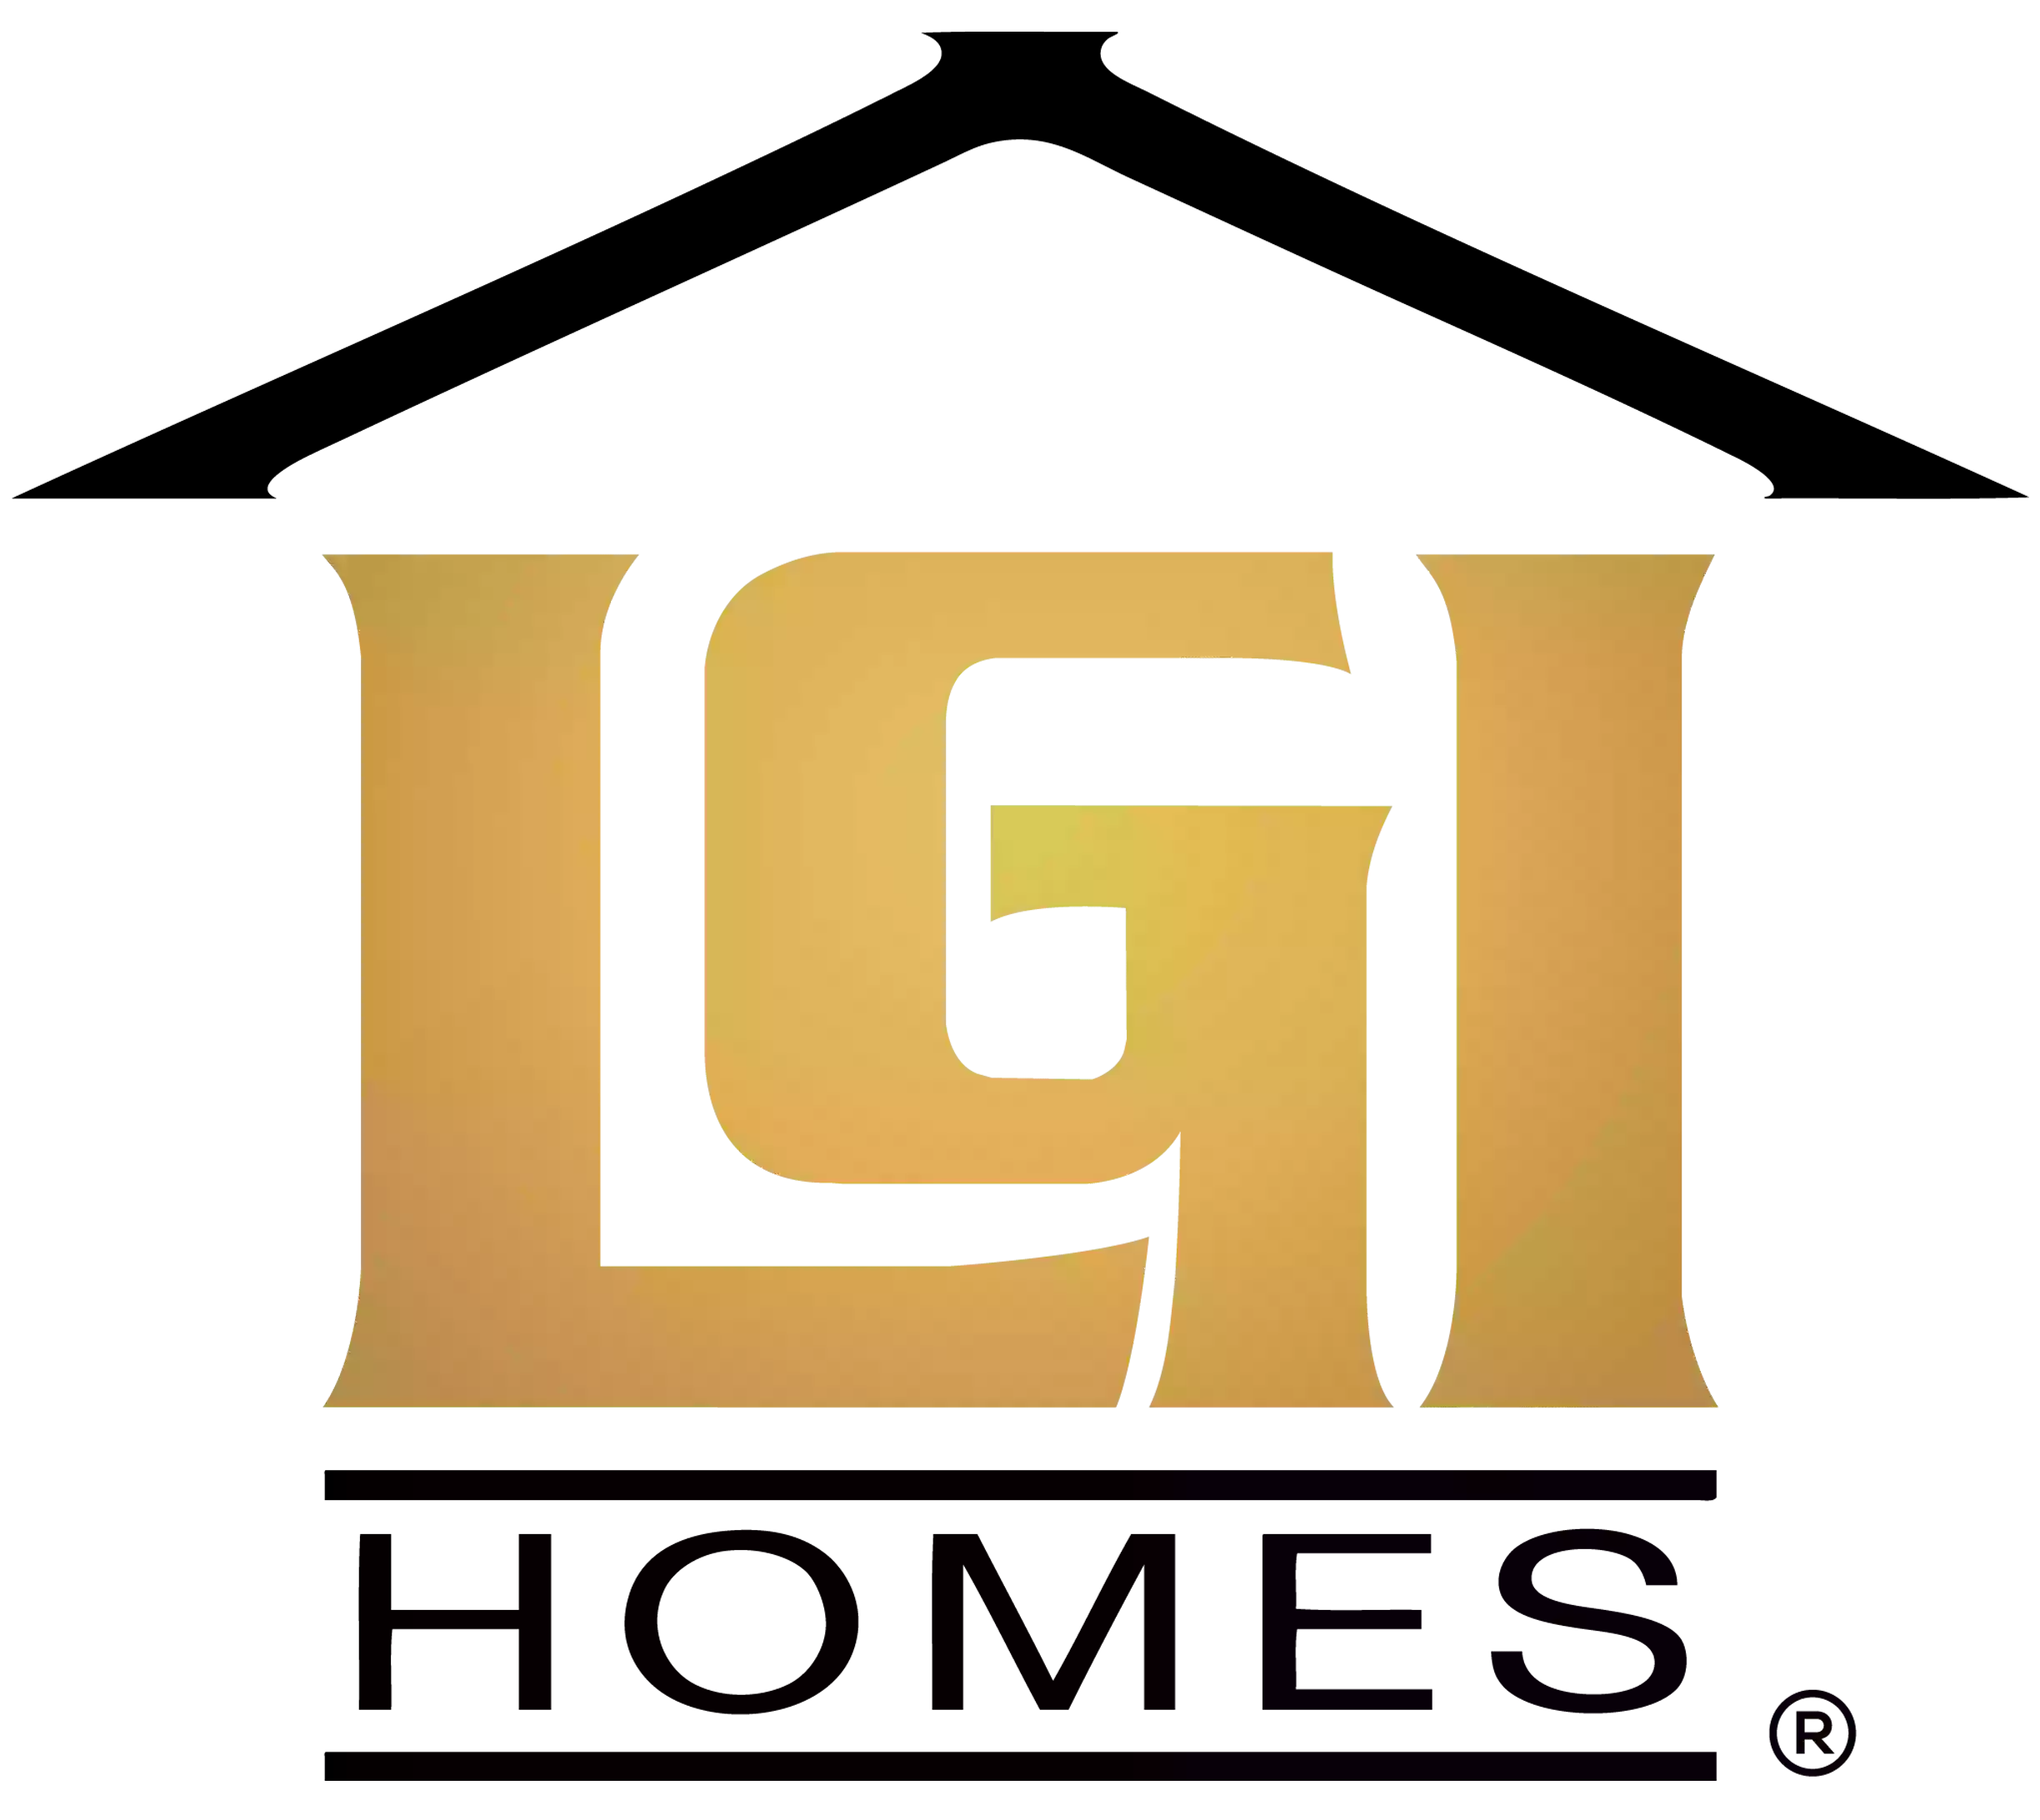 LGI Homes - Heritage Gardens